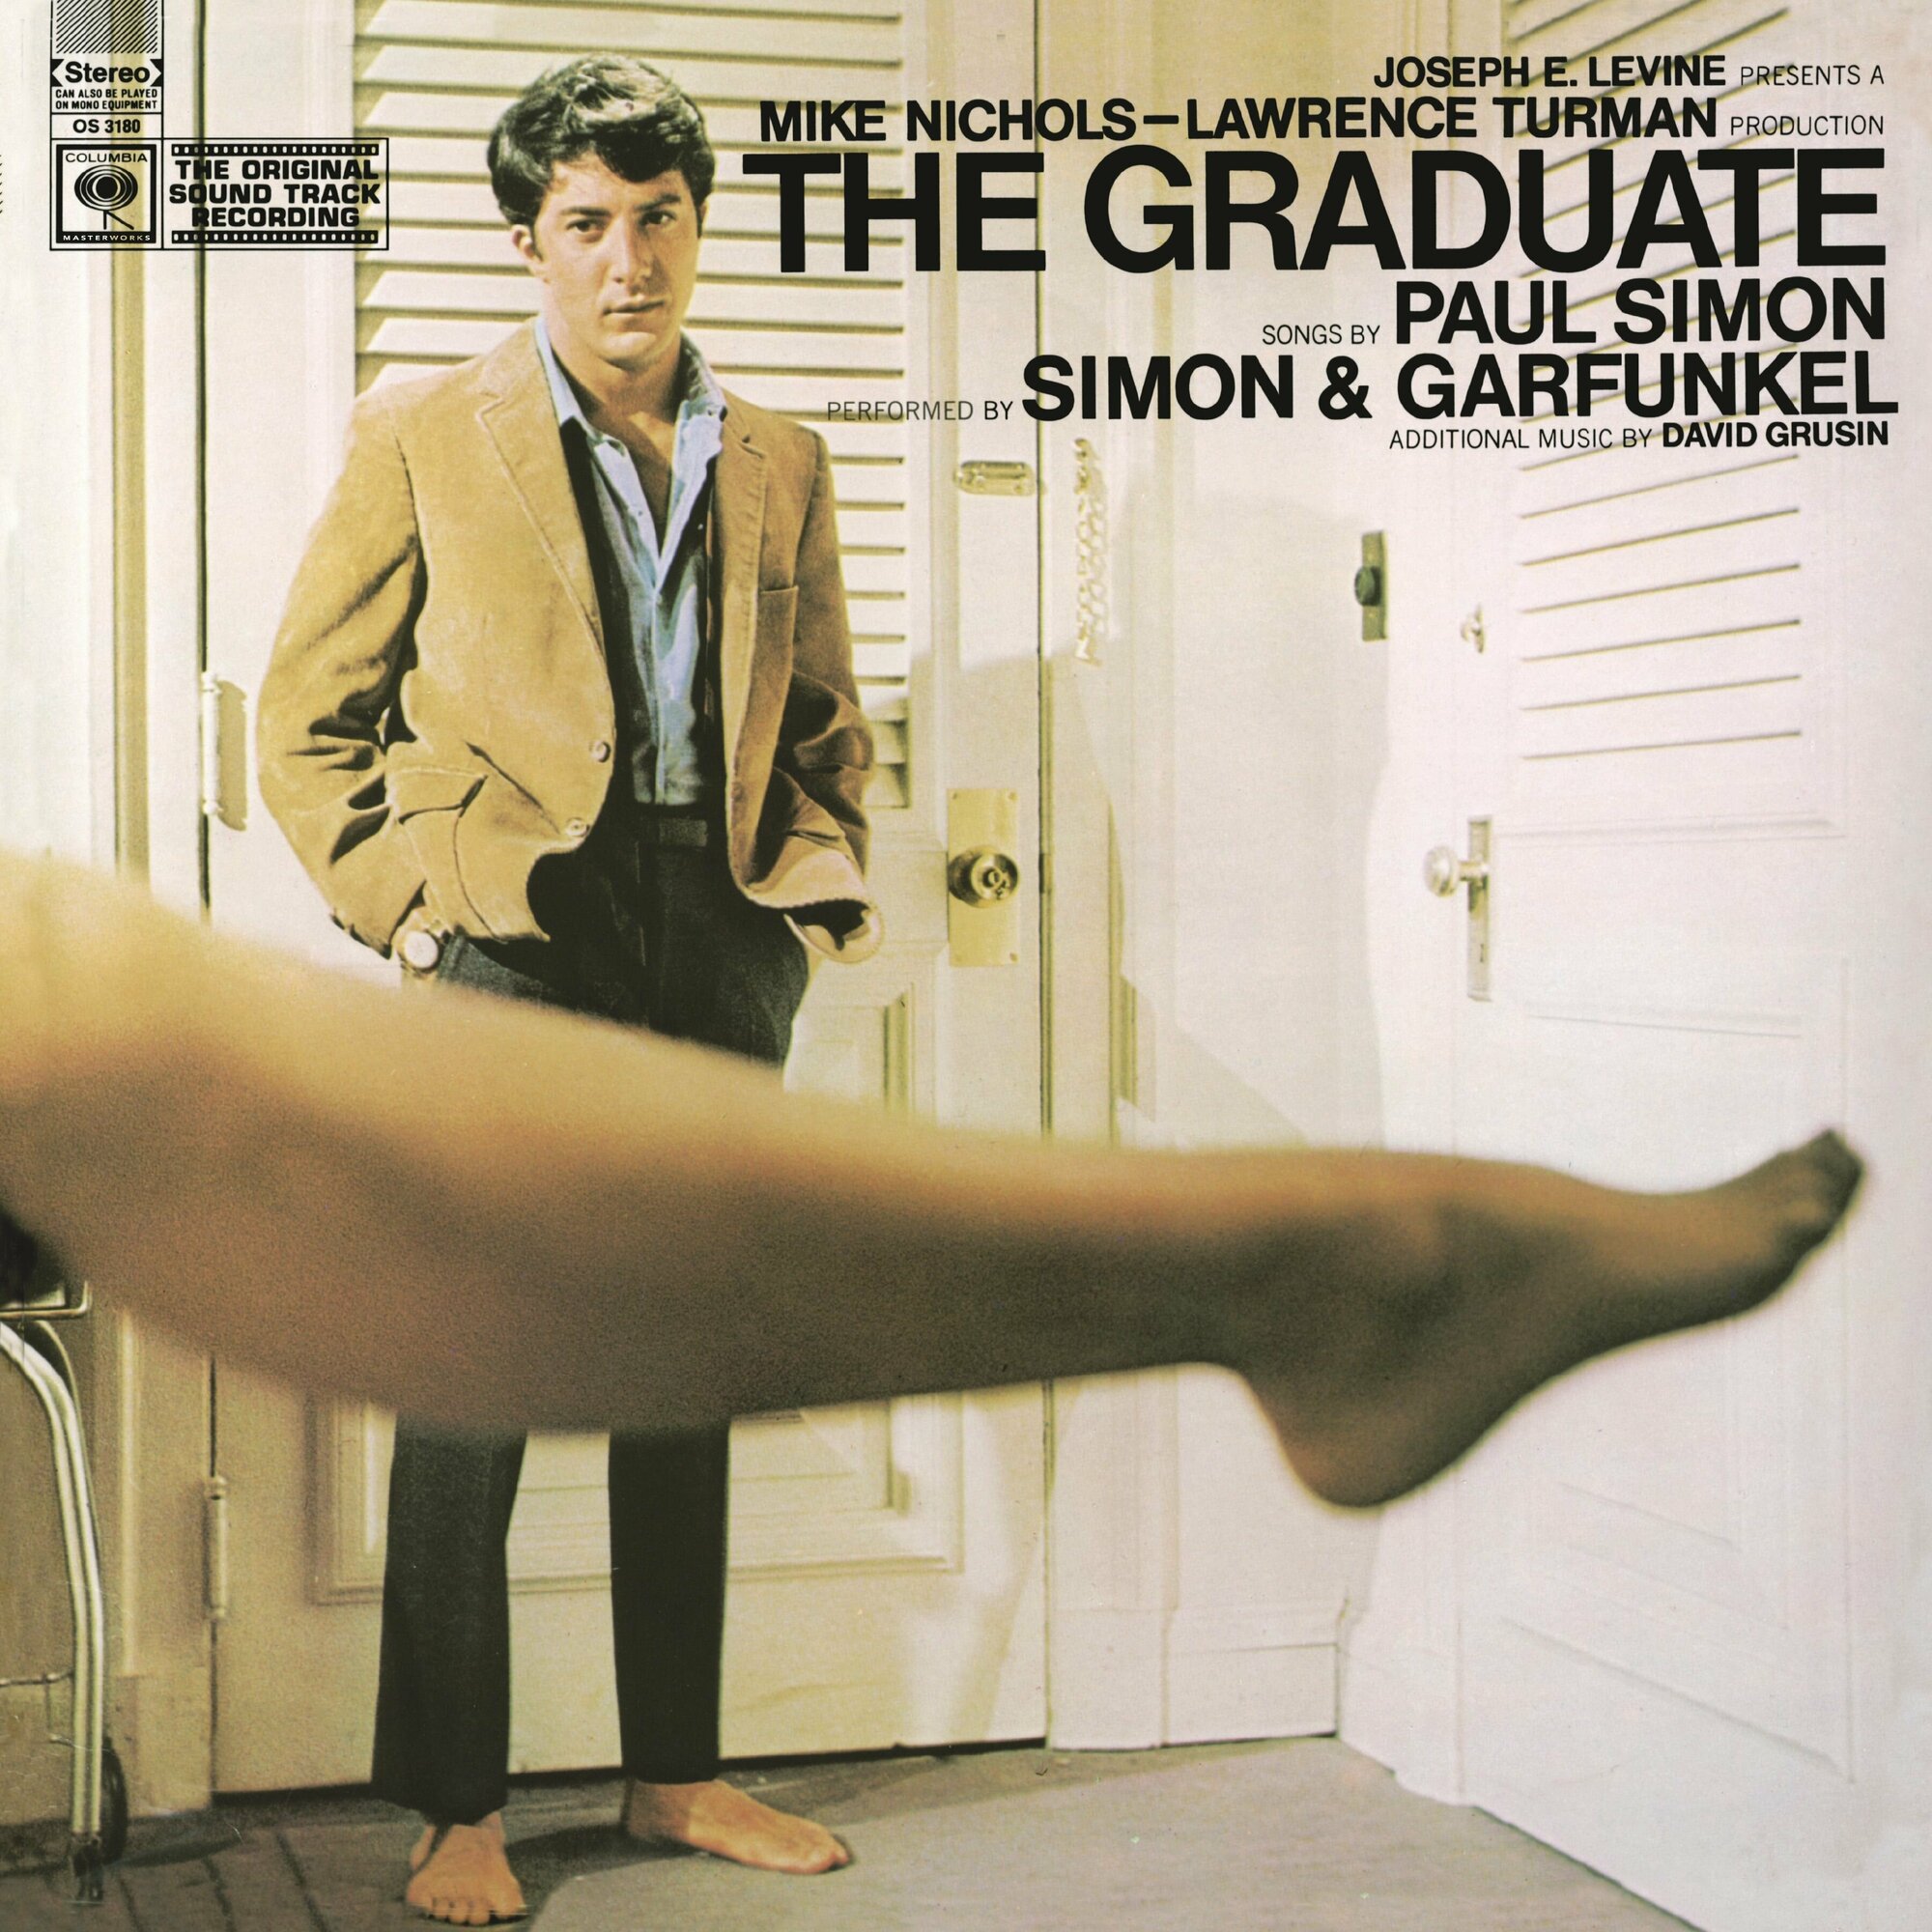 Simon & Garfunkel, Dave Grusin – The Graduate (Original Sound Track Recording)